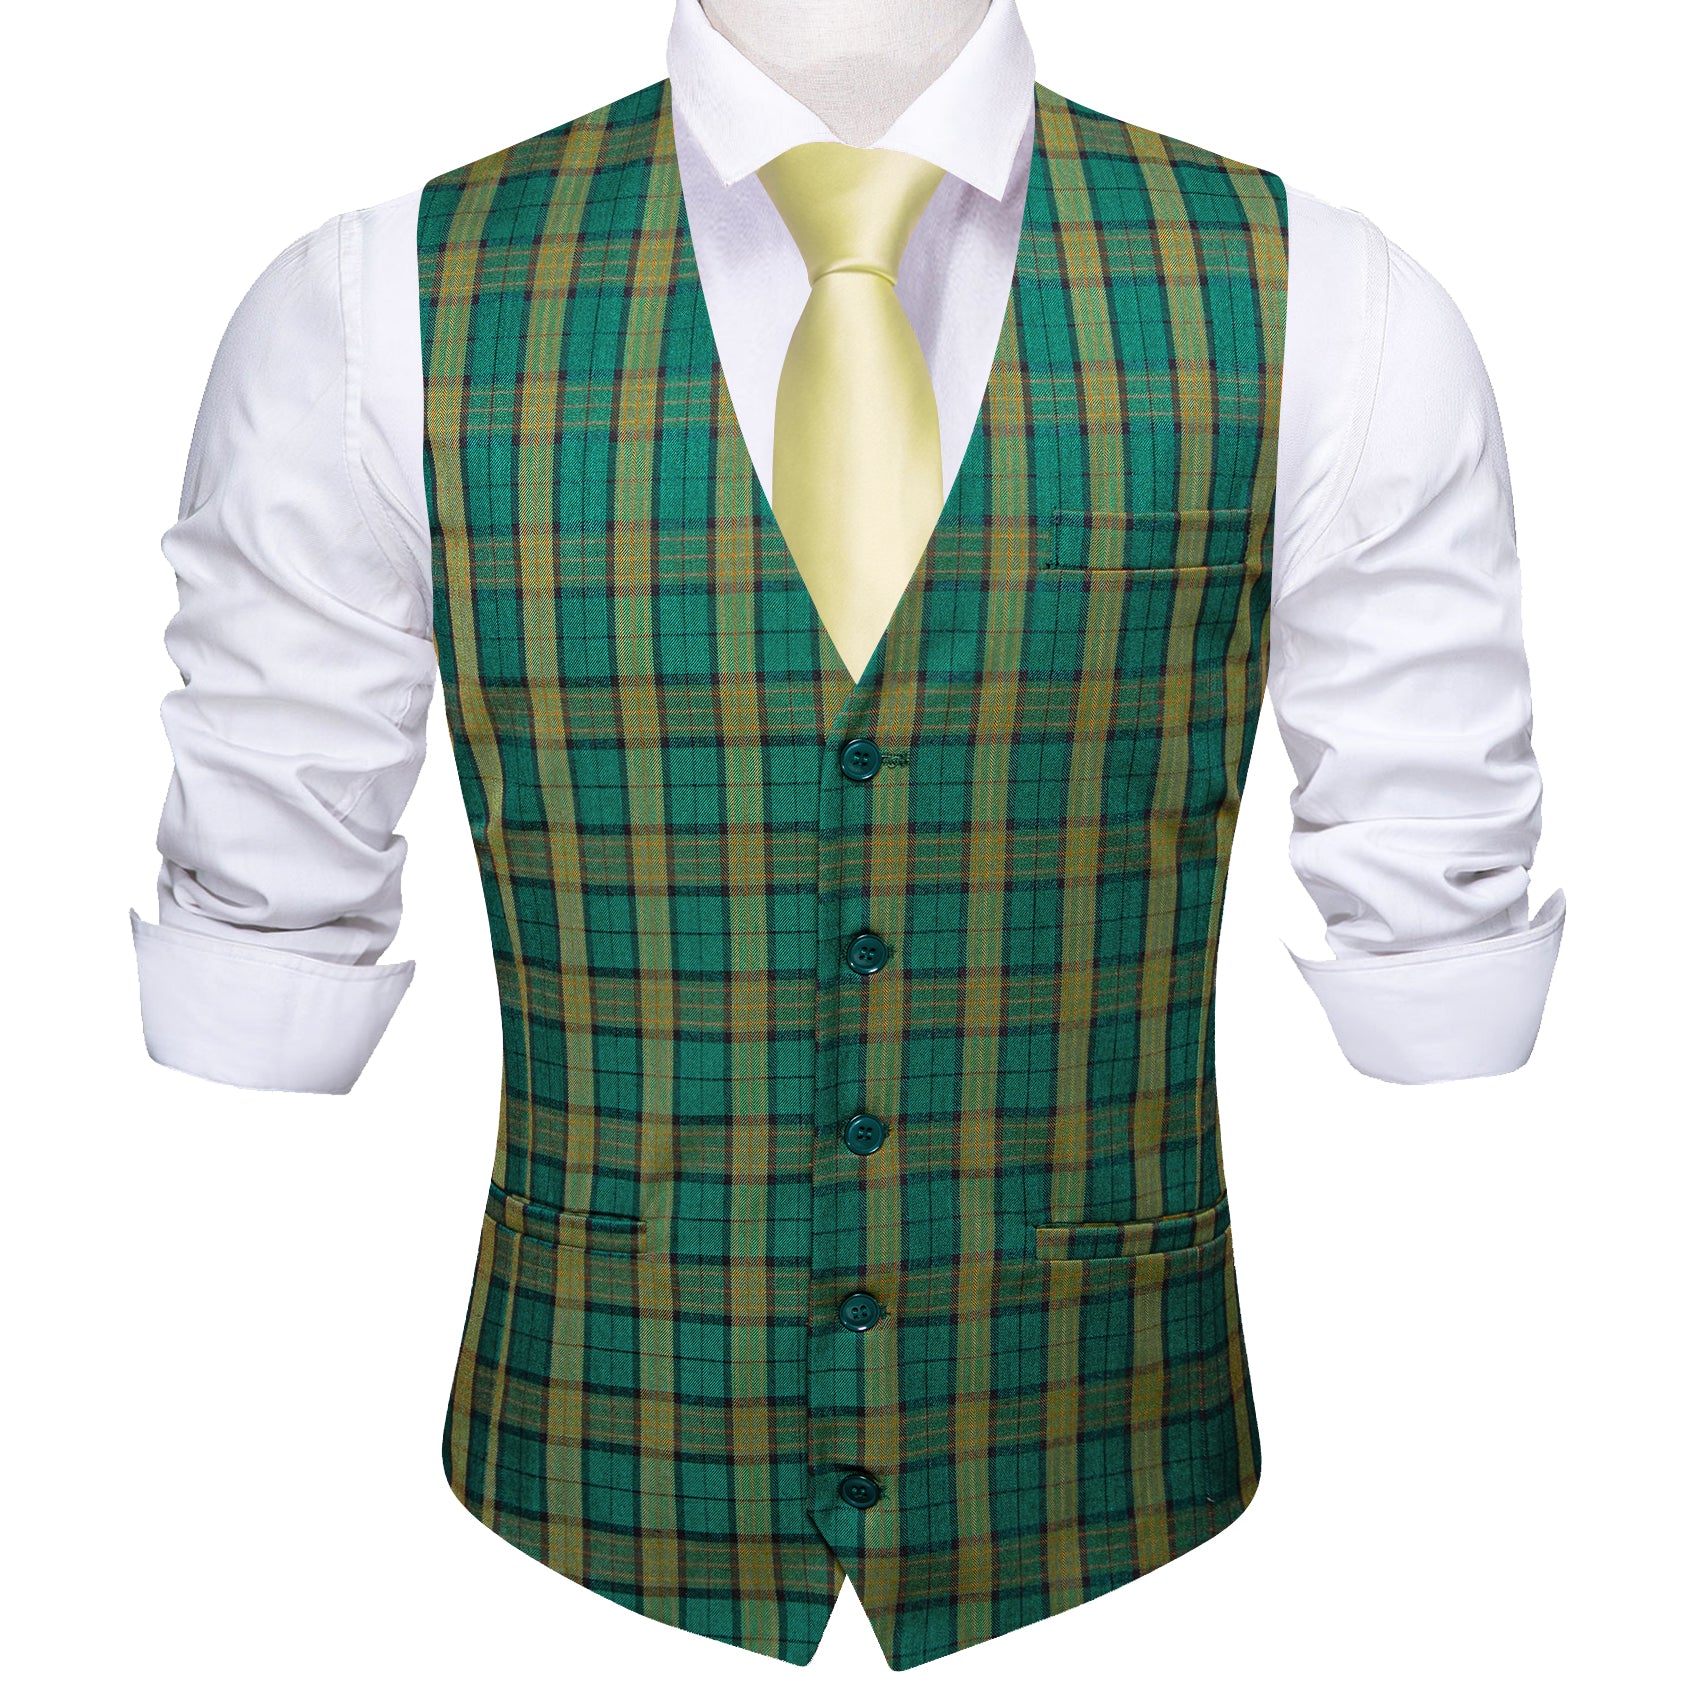 Barry.wang Men's Work Vest Green Yellow Plaid Waistcoat Vest